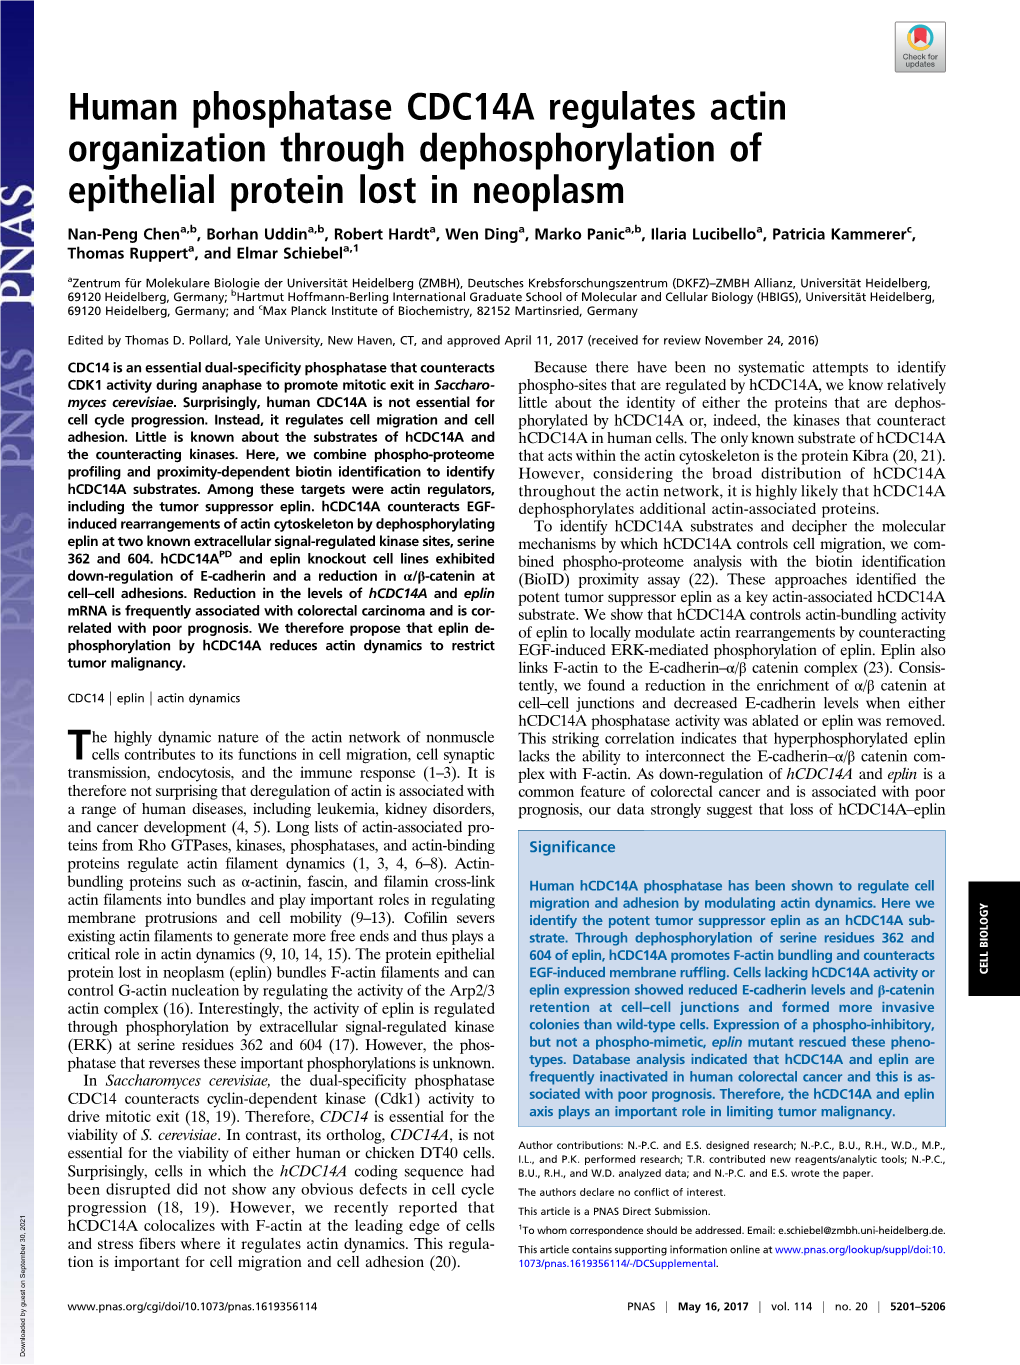 Human Phosphatase CDC14A Regulates Actin Organization Through Dephosphorylation of Epithelial Protein Lost in Neoplasm